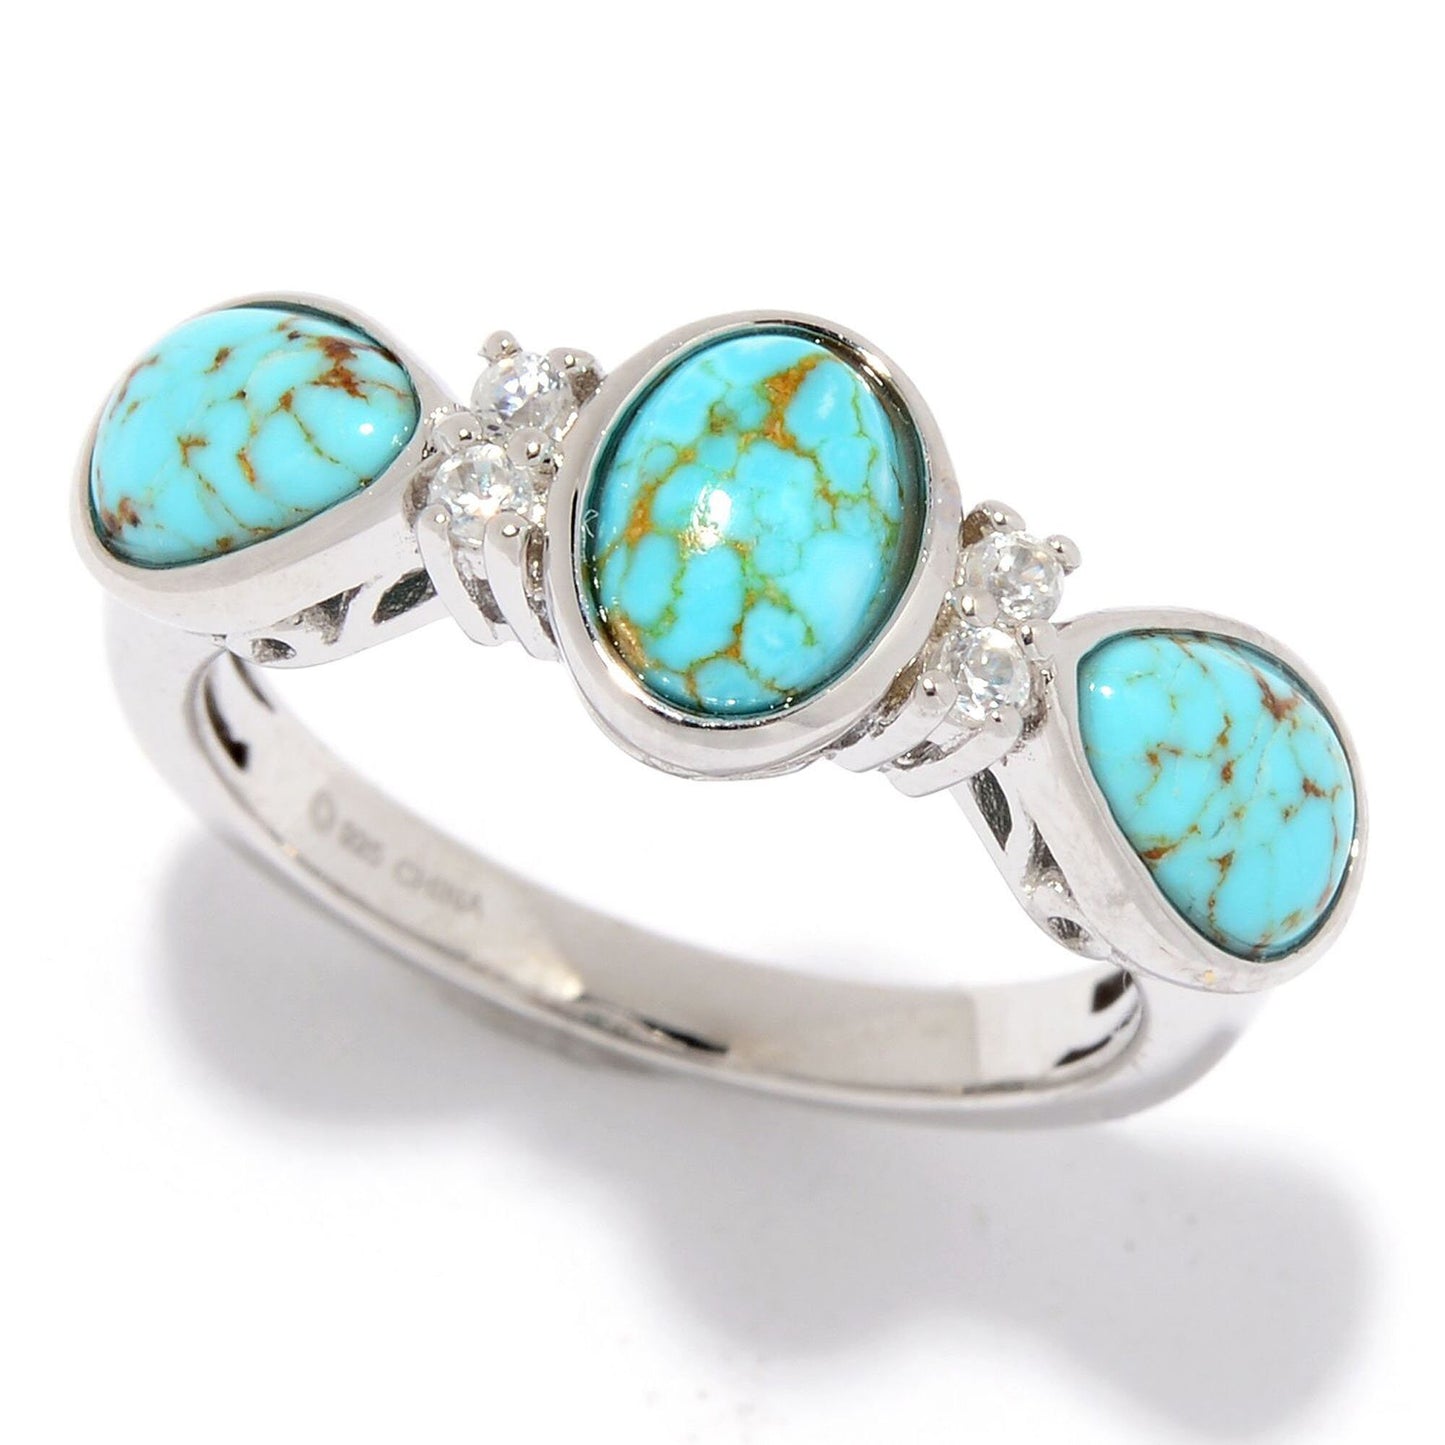 Kingman Turquoise Gemstone Ring, 925 Sterling Silver Ring, Engagement Ring, Birthstone Ring-Gemstone Jewelry Anniversary Gift-Gift For Her